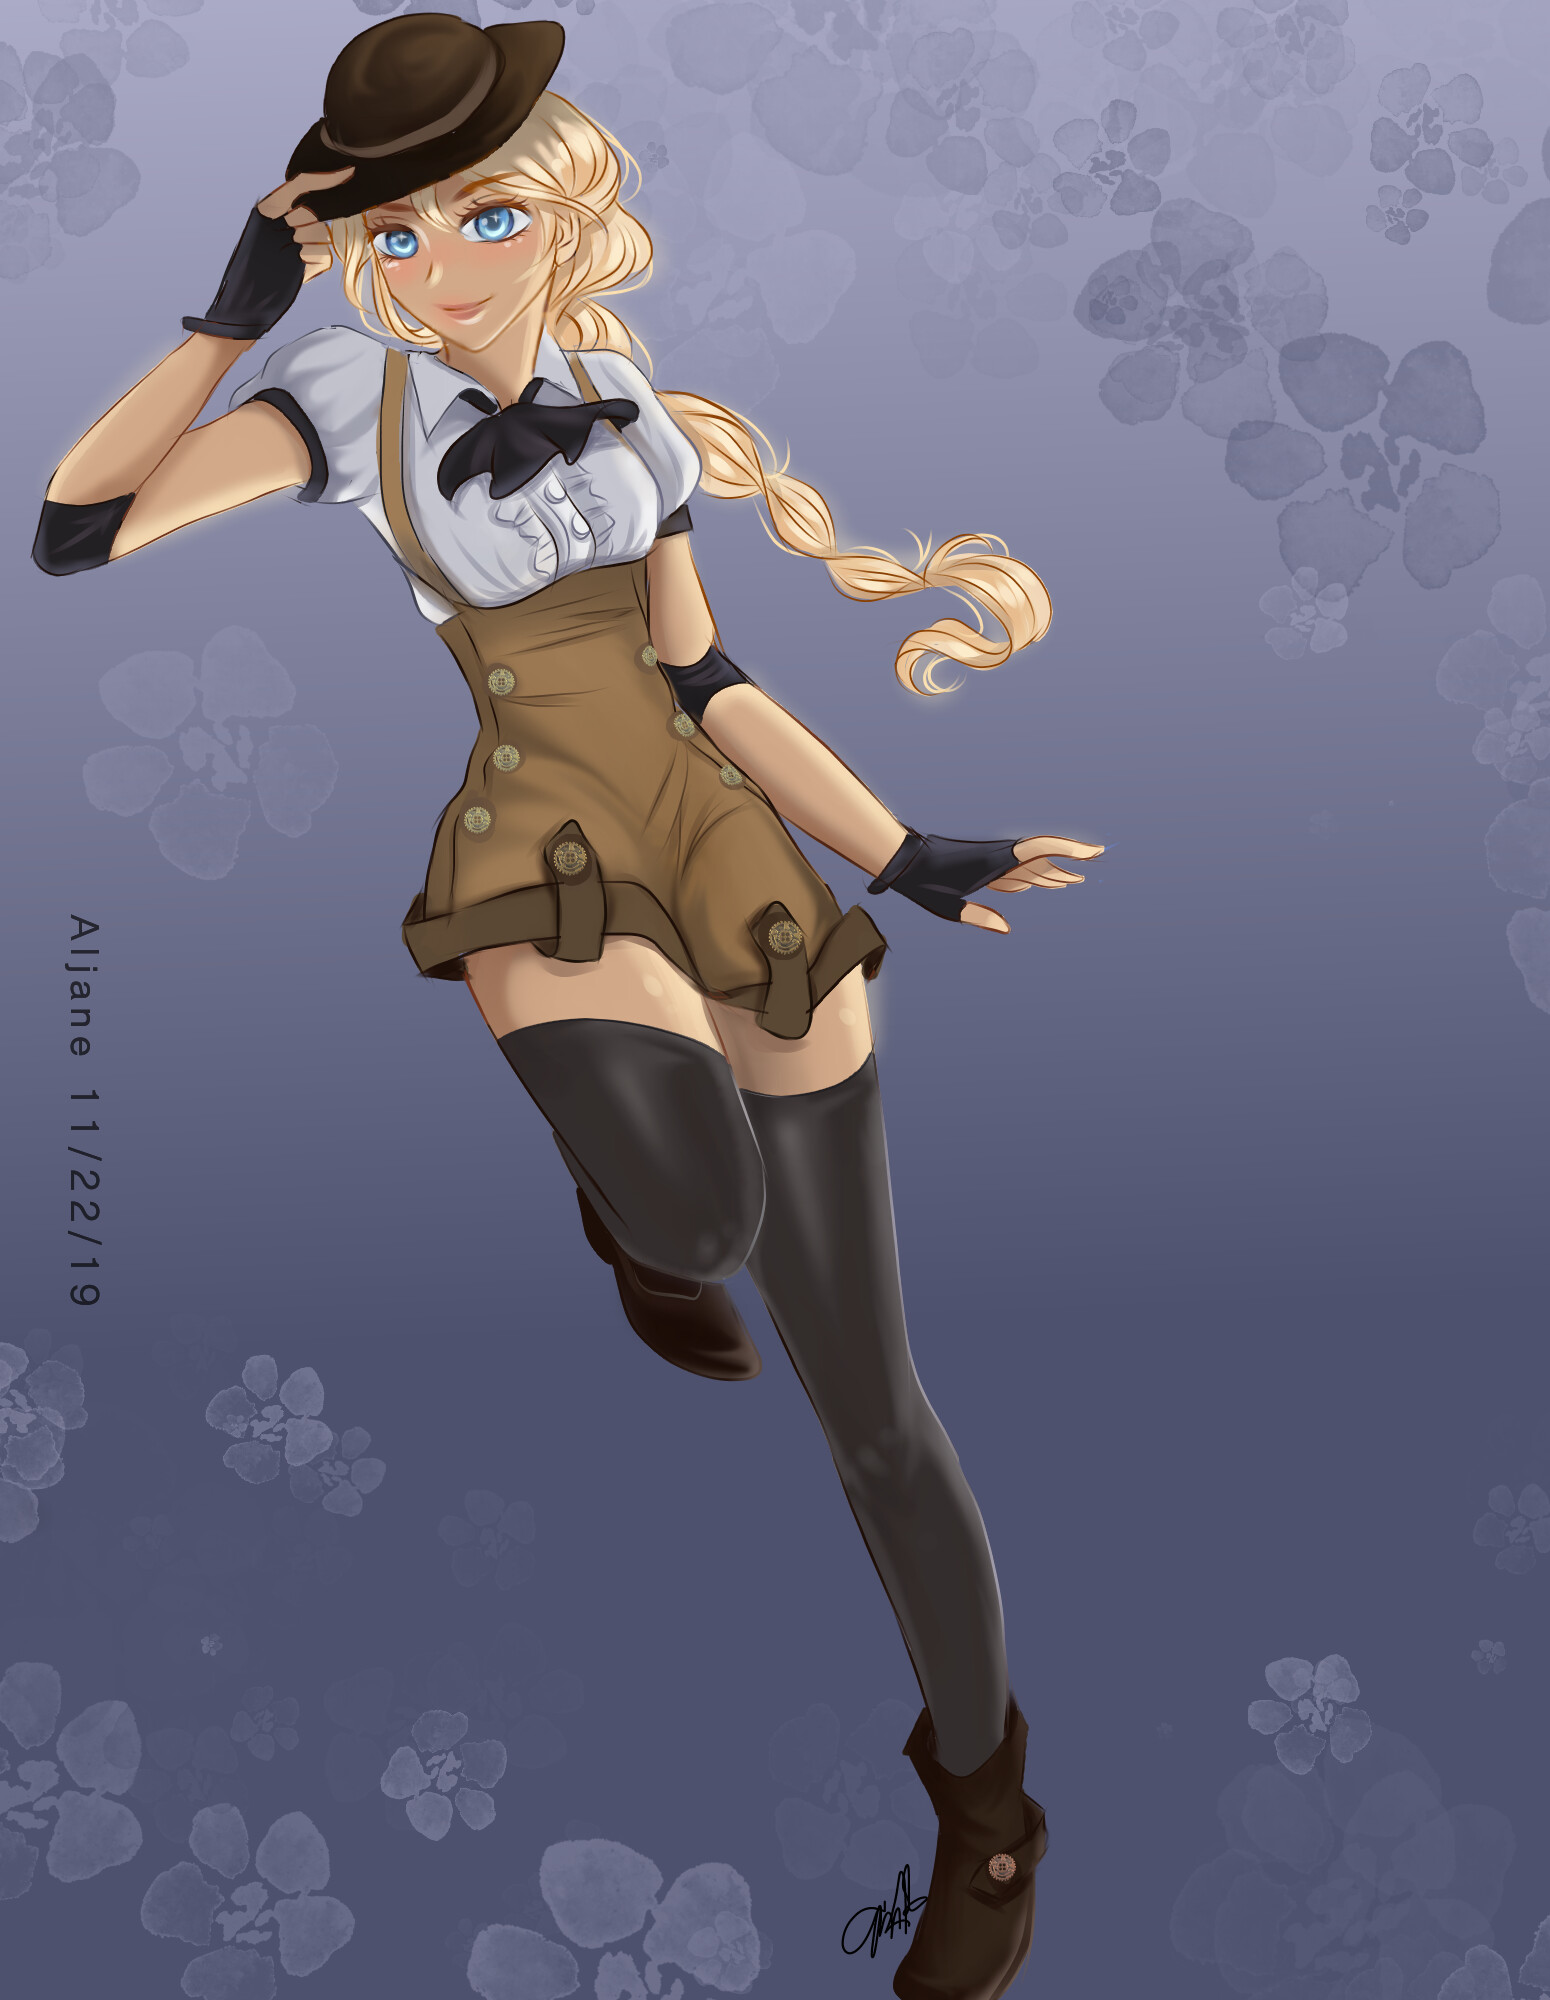 Anime steampunk girl 2 by NeuroMage on DeviantArt